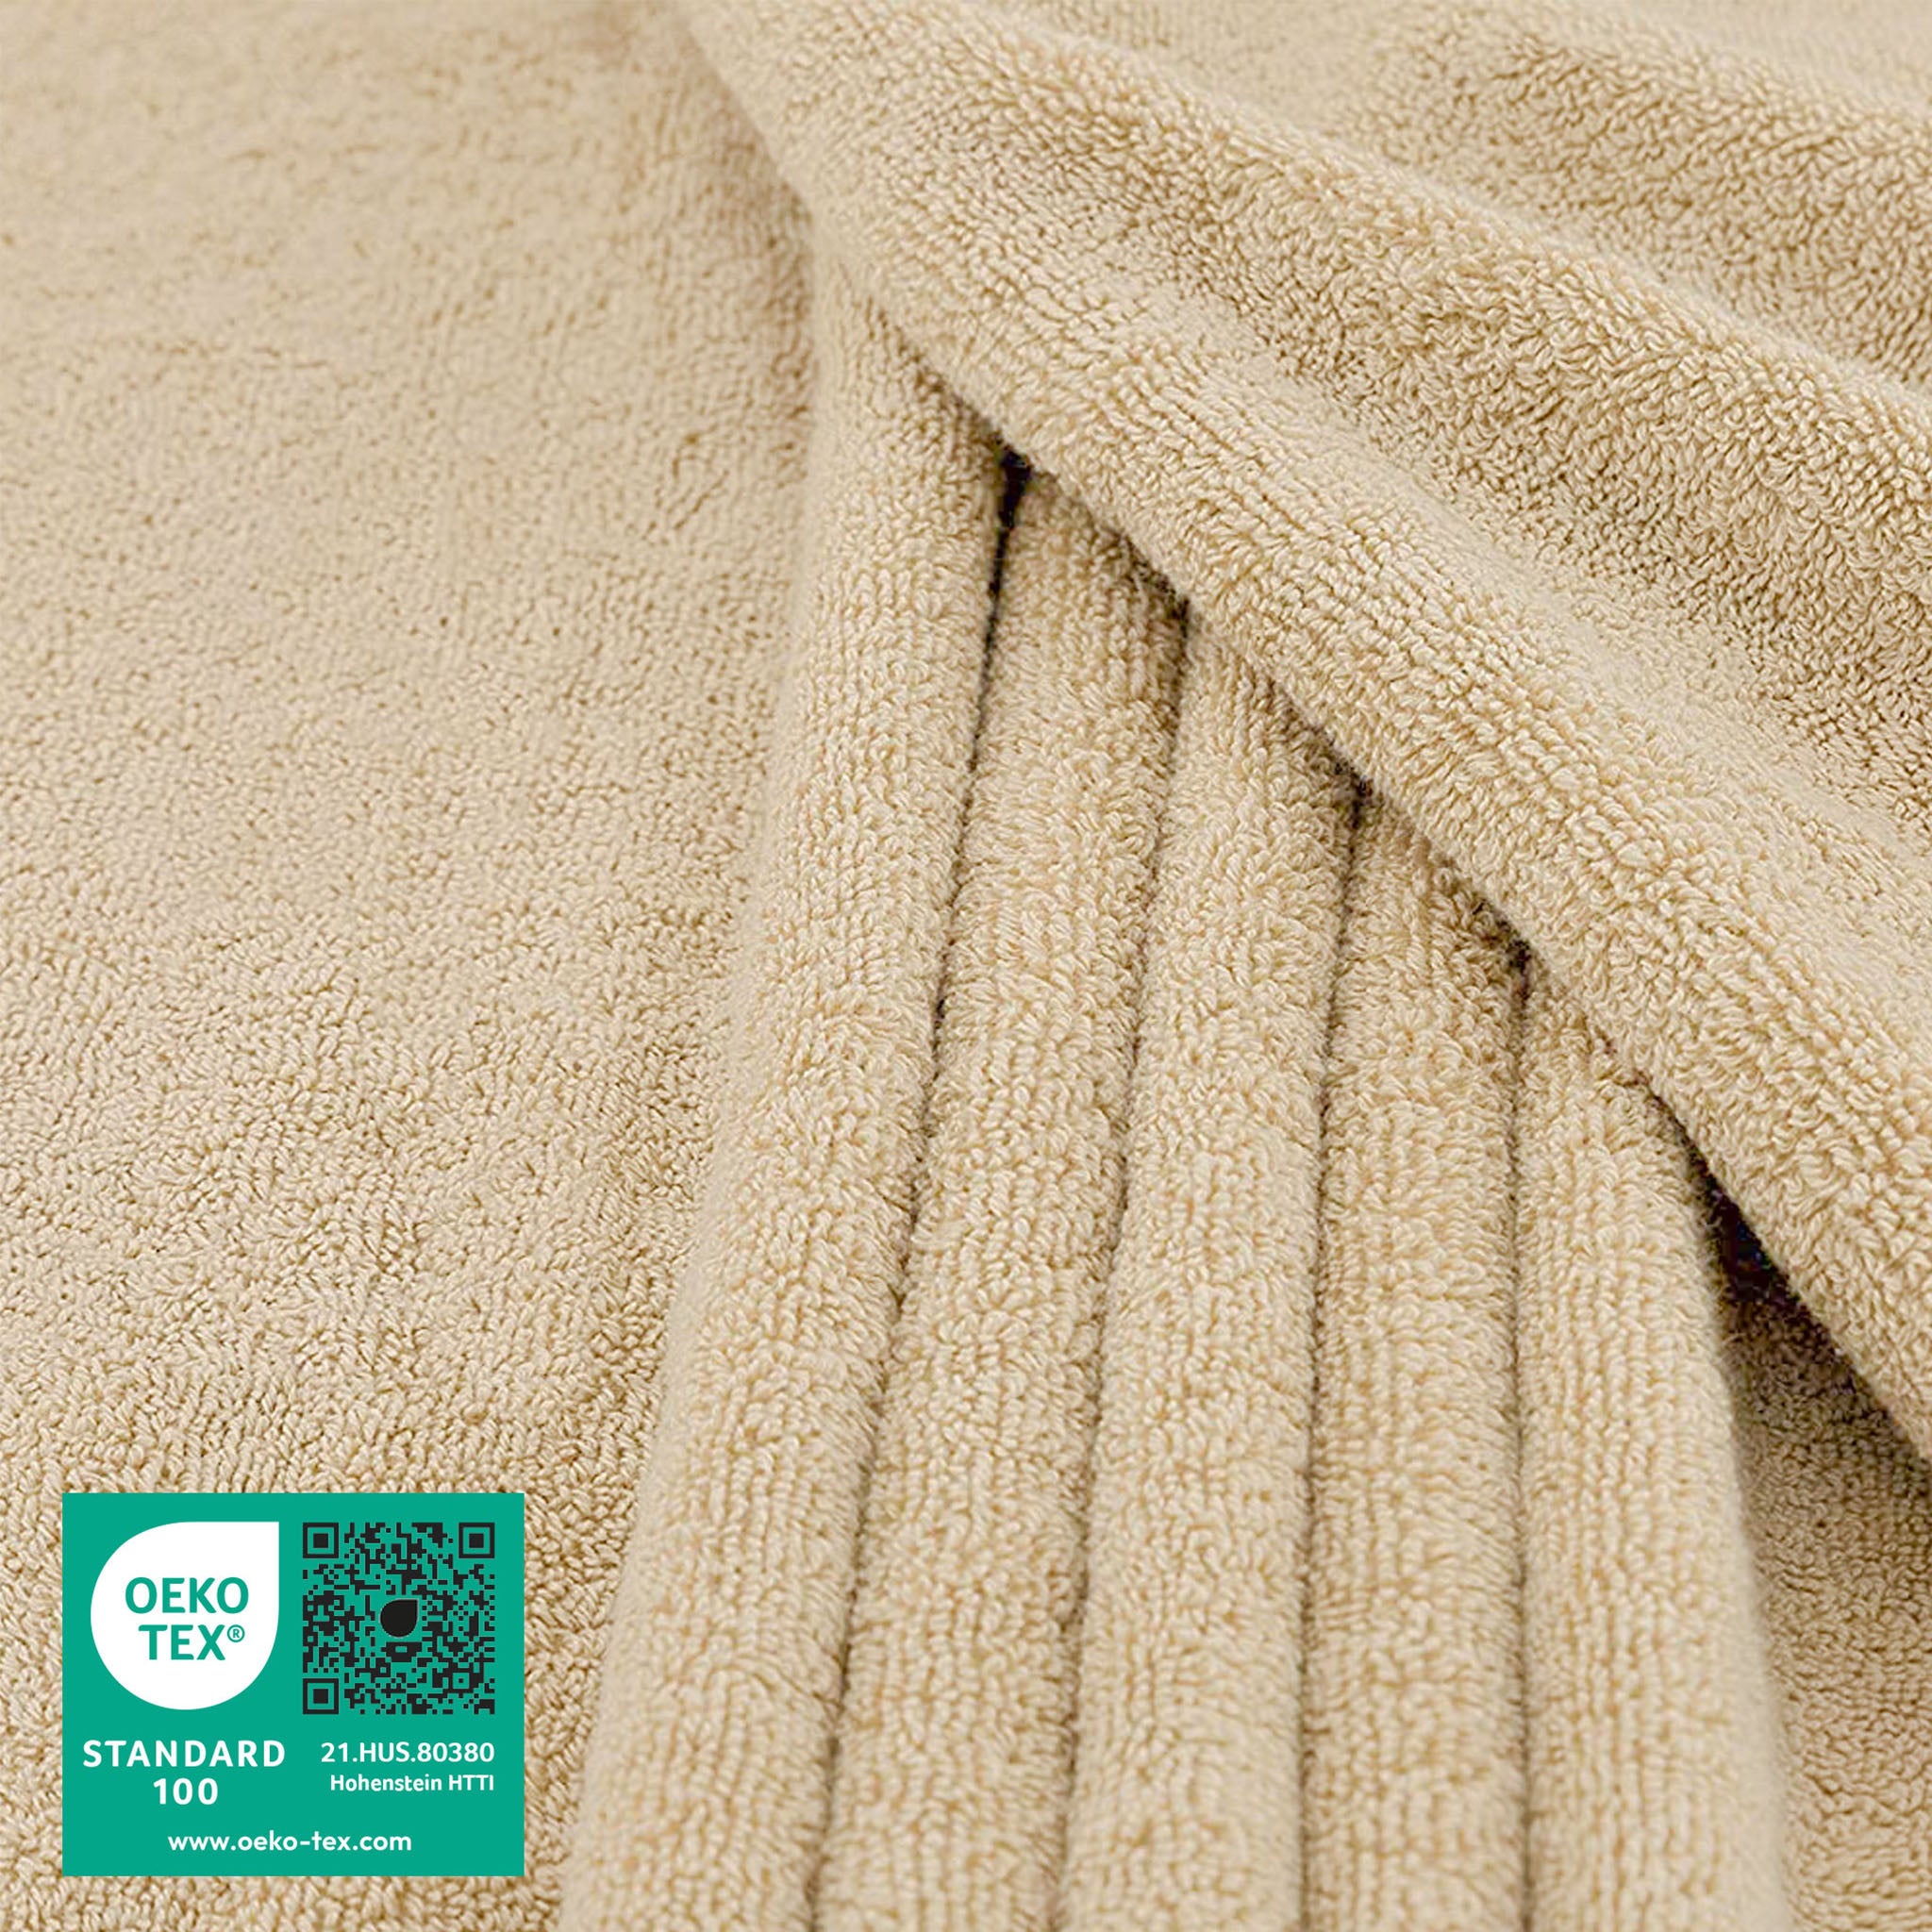 American Soft Linen Bath Sheet 40x80 Inch 100% Cotton Extra Large Oversized Bath  Towel Sheet - Rockridge Gray 